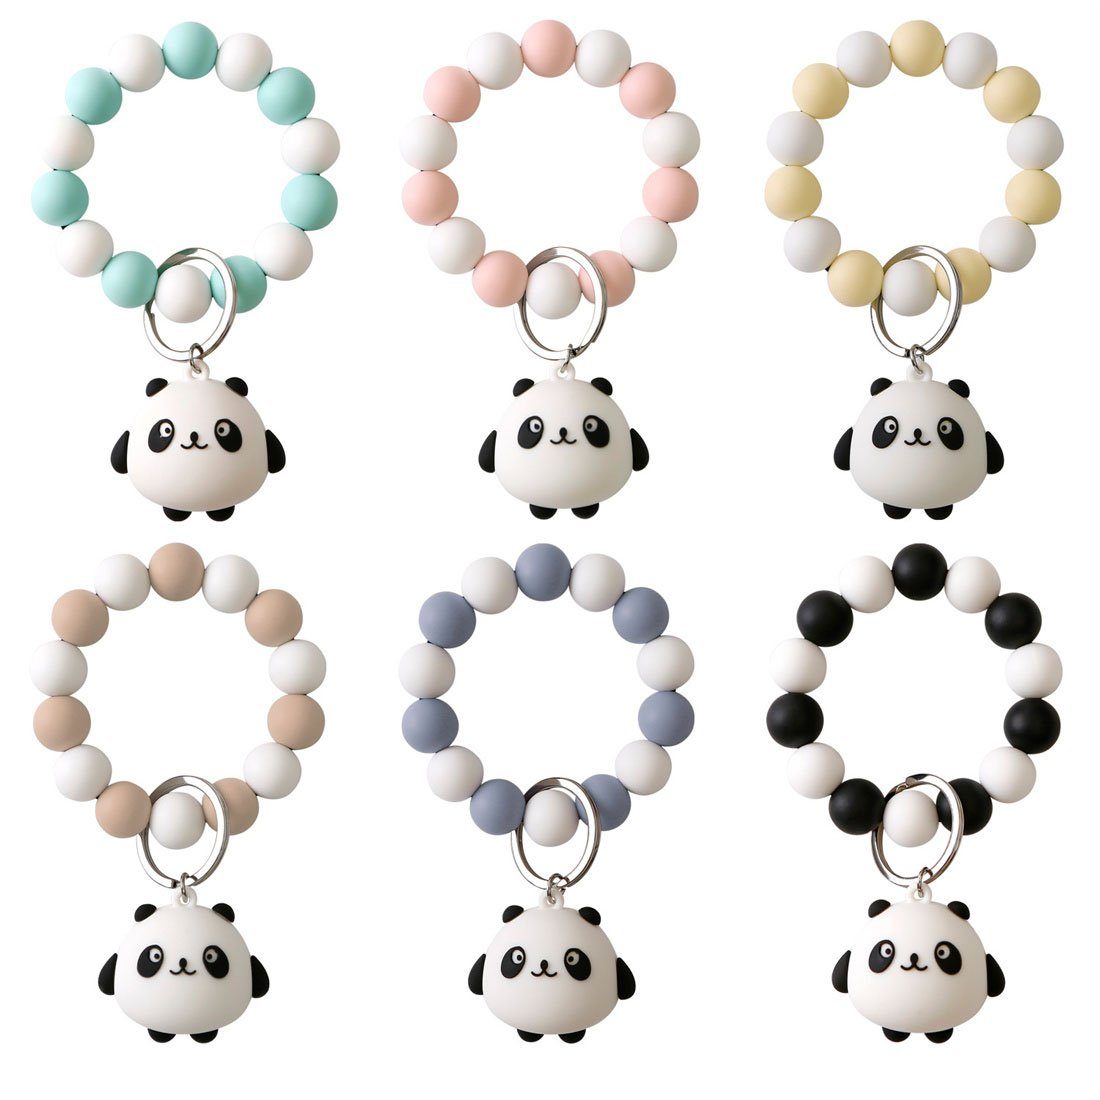 DÖRÖY für das grün Perlen Schlüsselanhänger Silikon-Schlüsselanhänger Panda Handgelenk mit